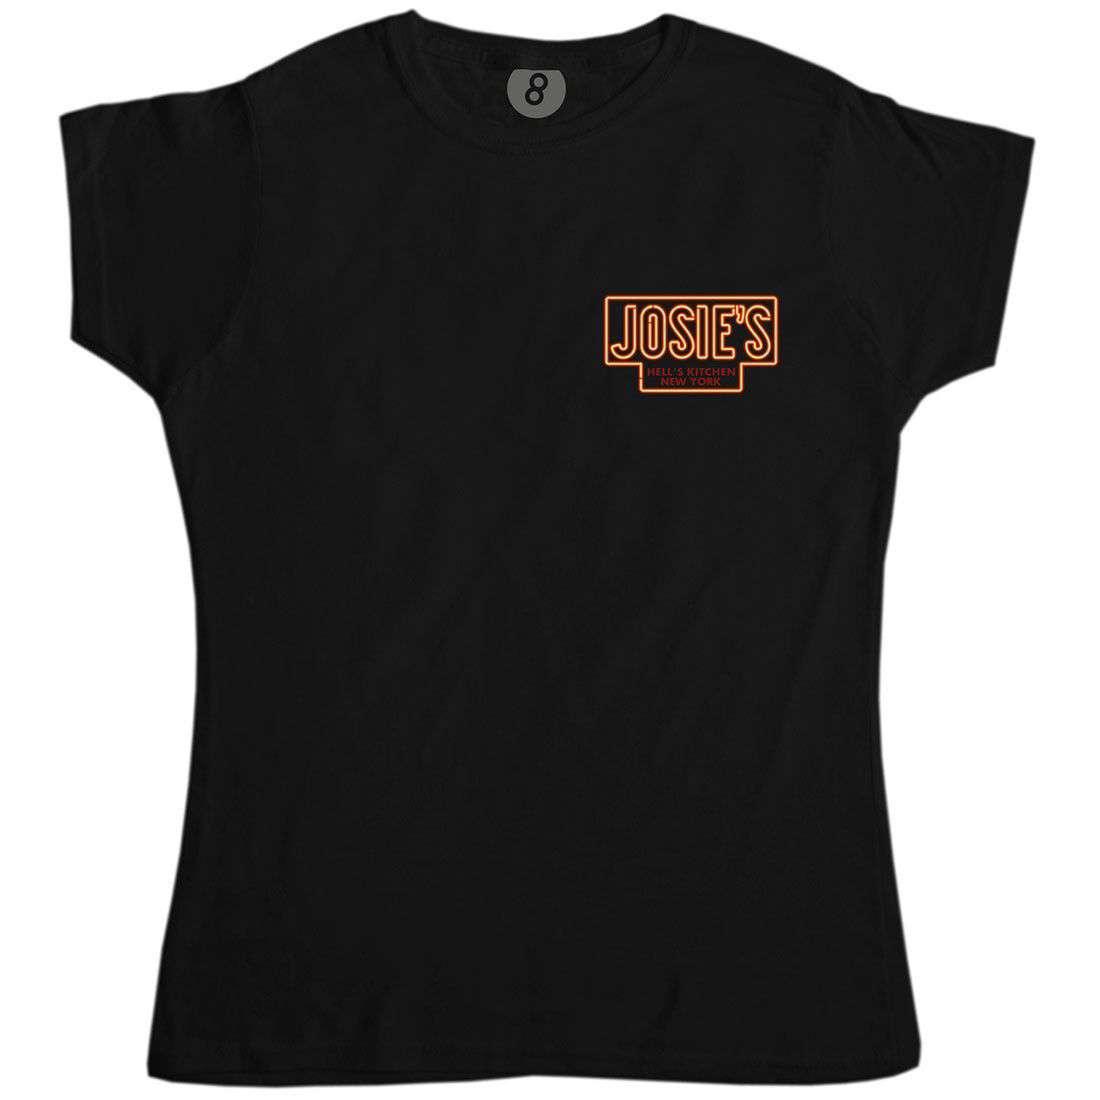 Josies Bar Pocket And Back Print Womens T-Shirt 8Ball